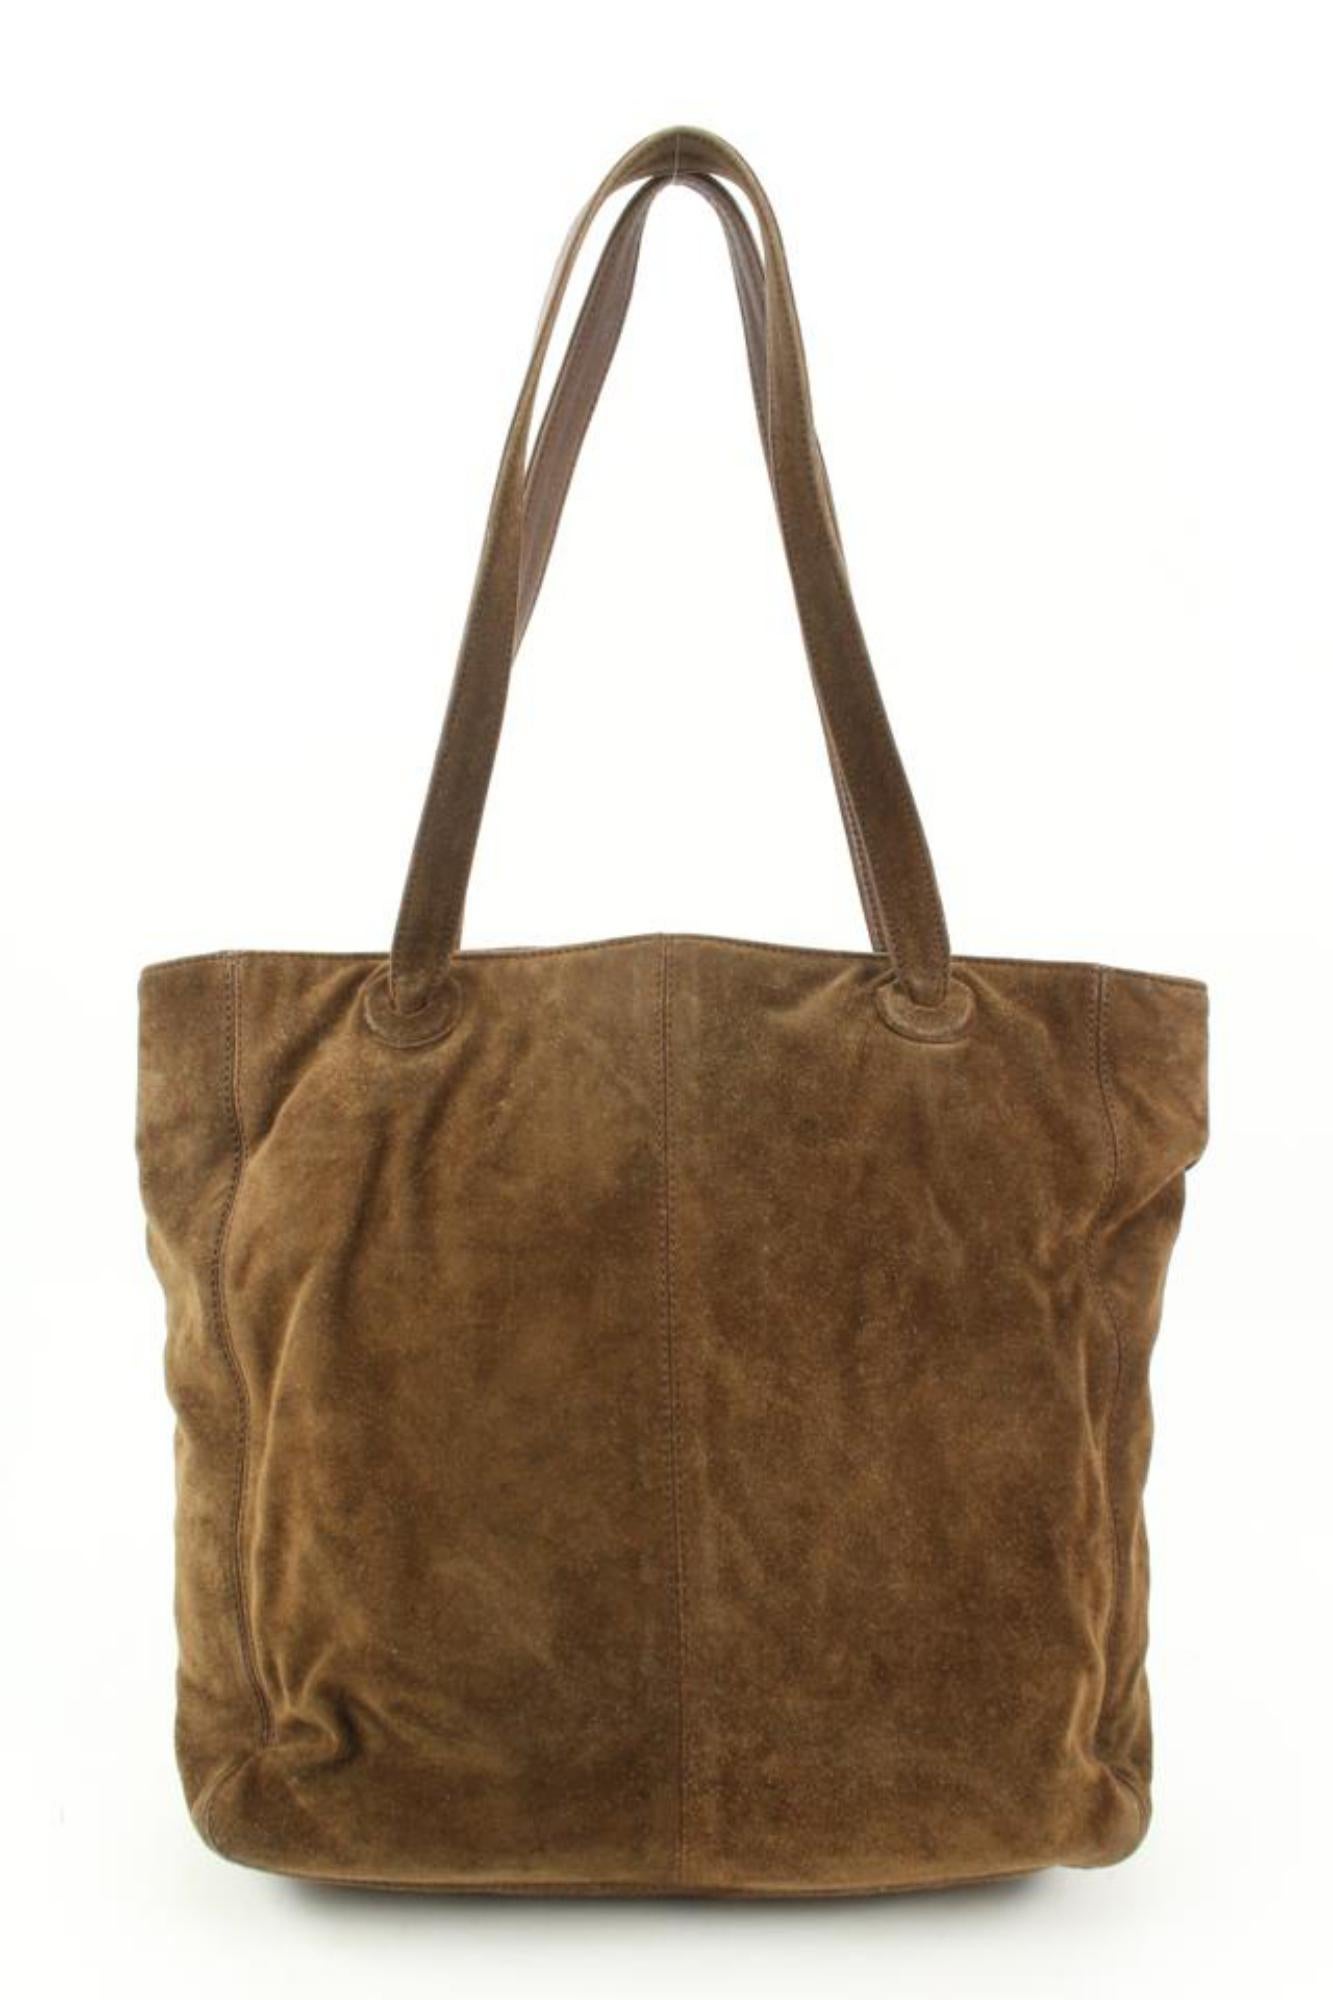 Chanel Brown Suede CC Logo Shopper Tote Bag 118cas27 For Sale 2